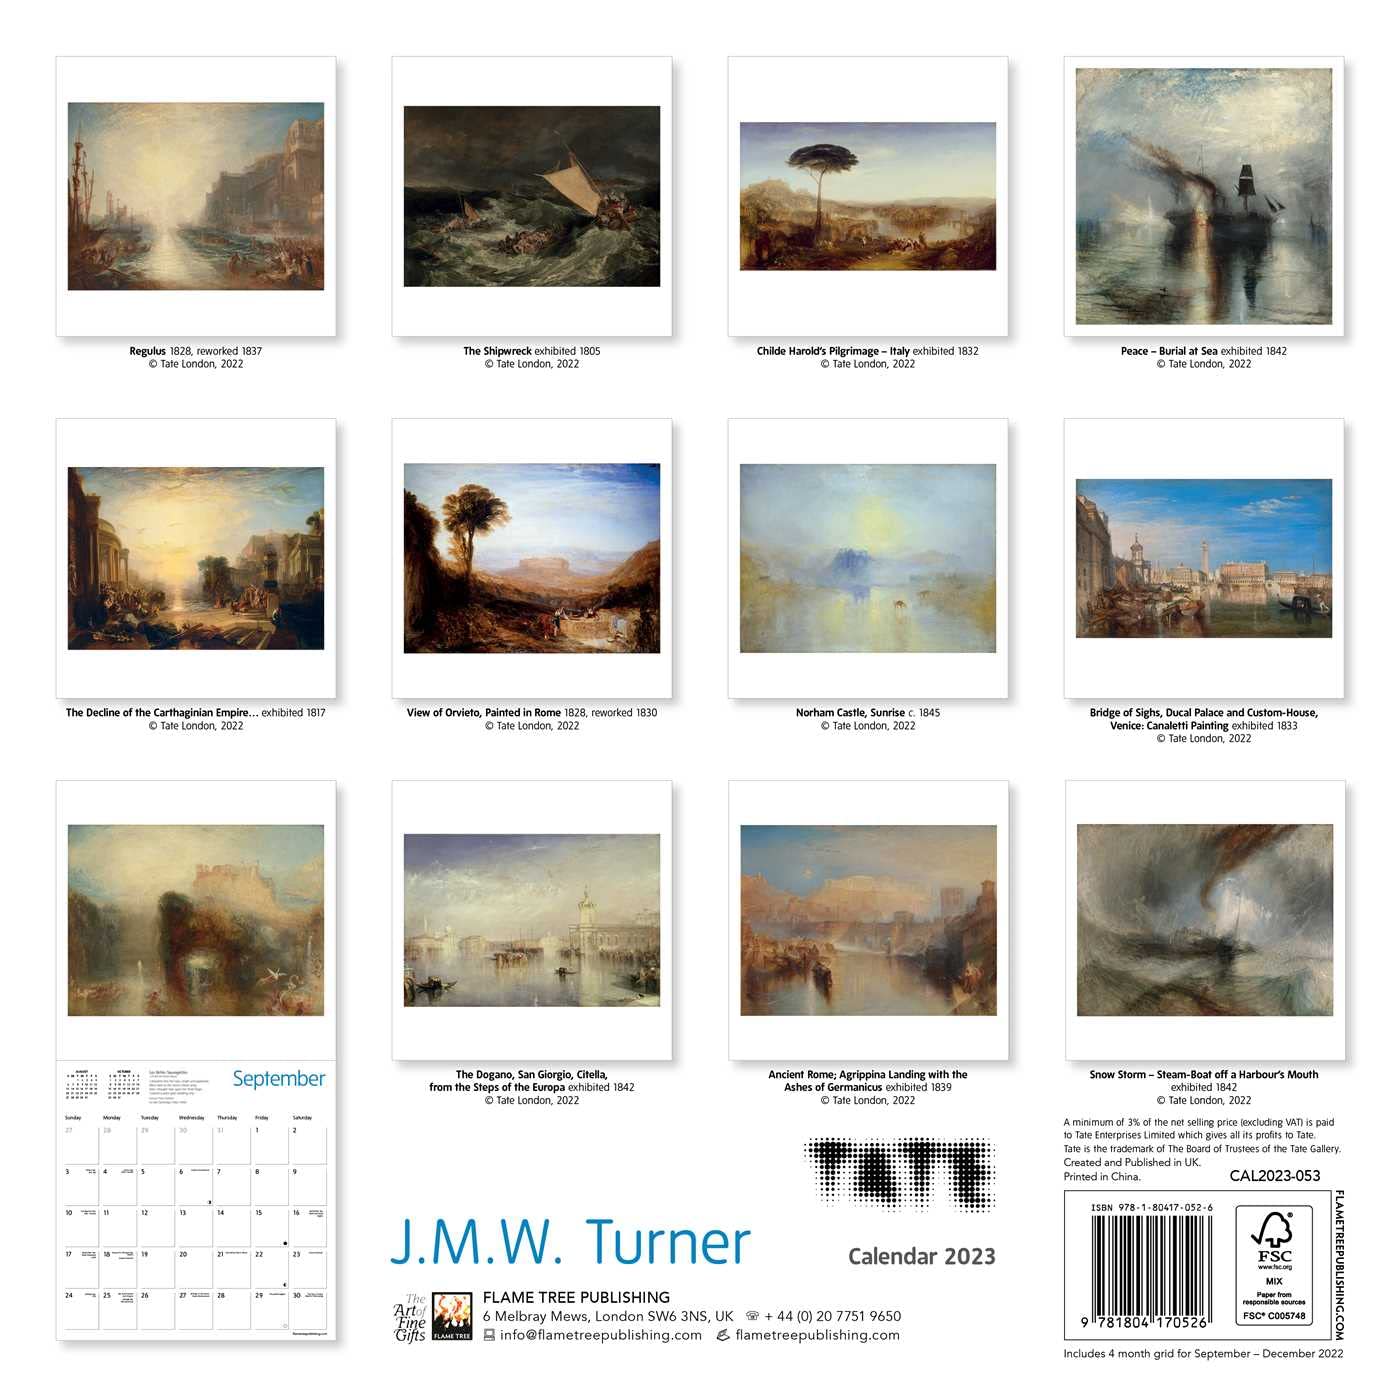 Calendar 2023 Tate J.M.W. Turner Flame Tree Publishing